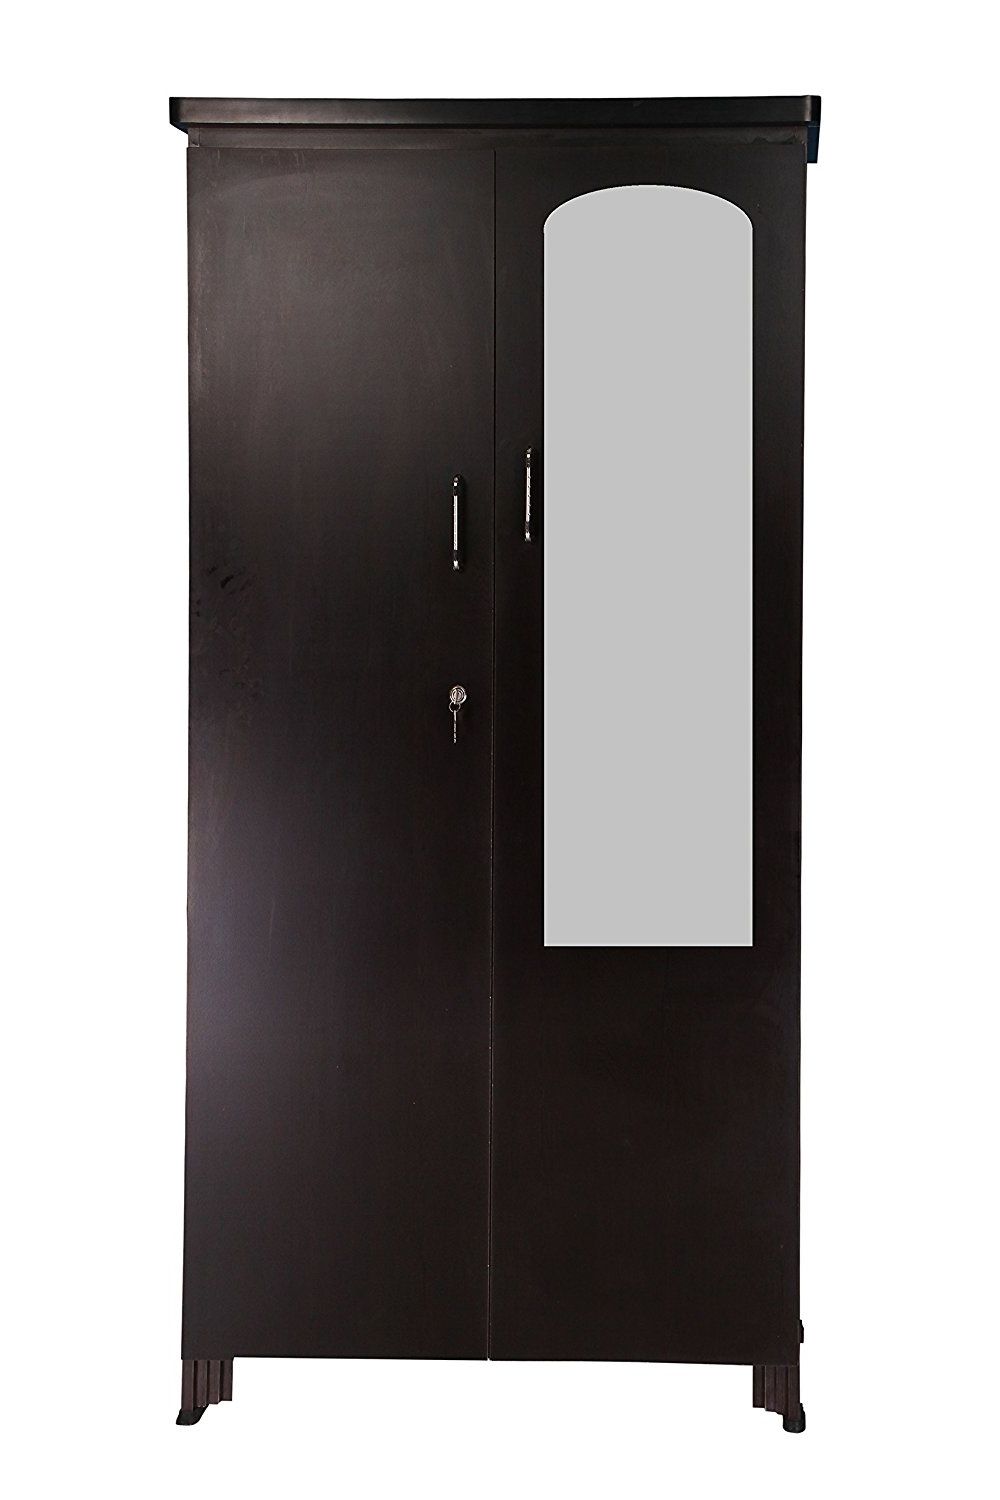 Preferred Generic Double Door Wardrobe With Mirror And Drawers In Dark Inside One Door Wardrobes With Mirror (View 12 of 15)